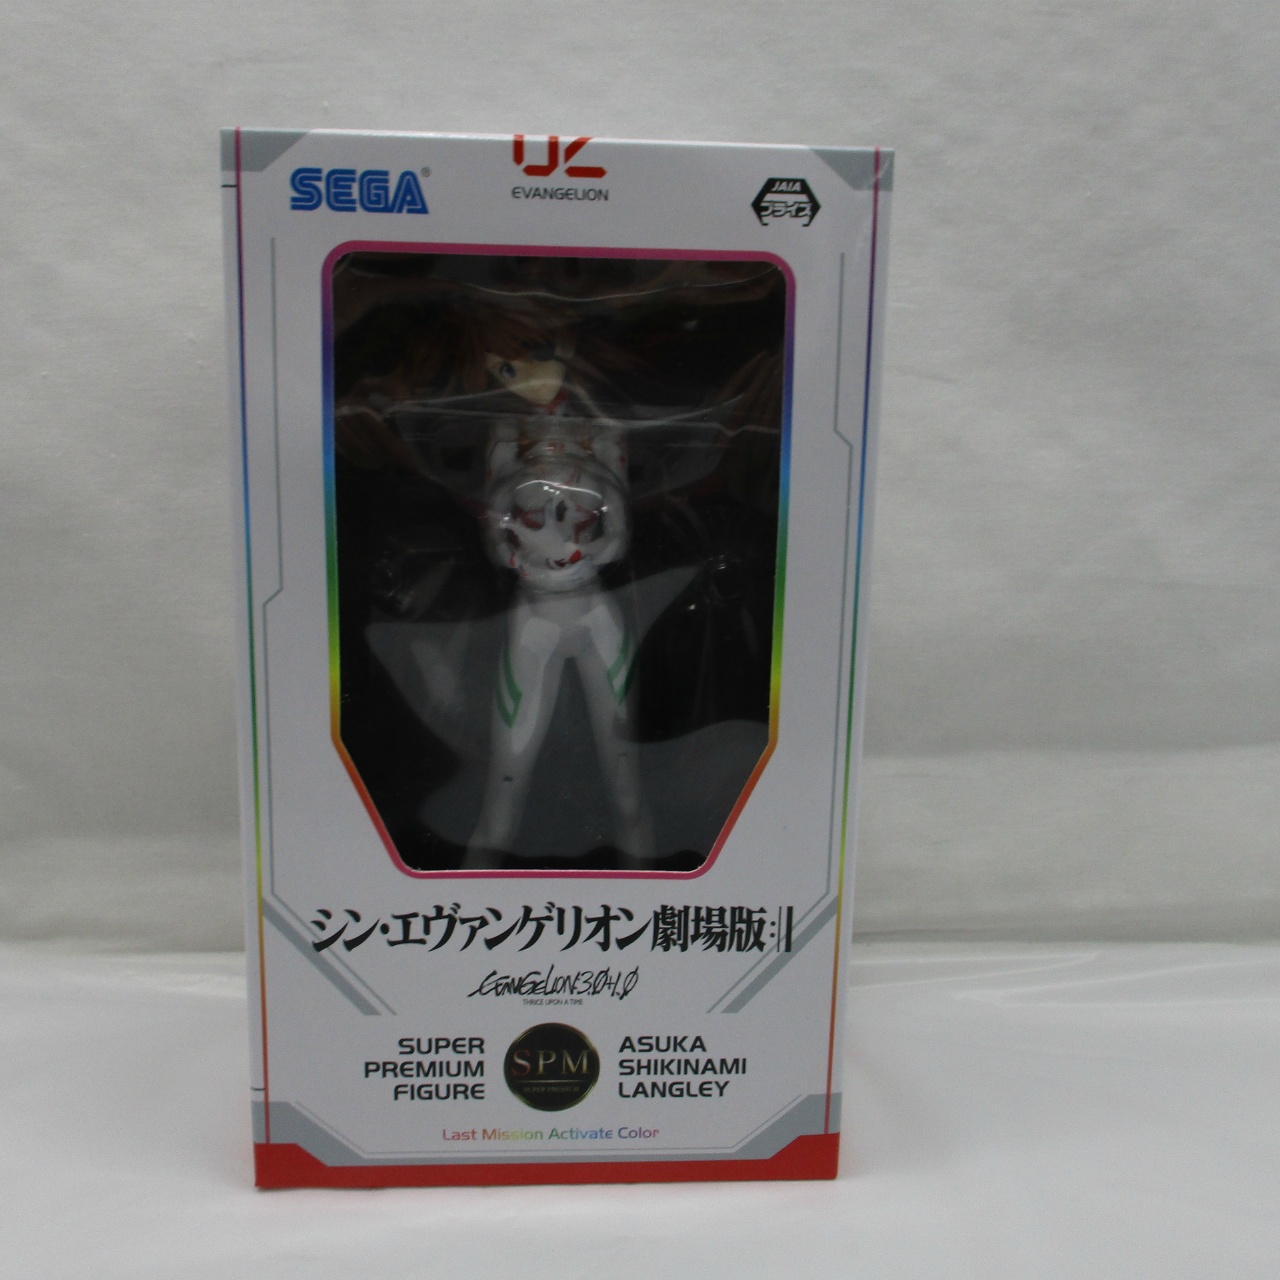 Sega Shin Evangelion Theatrical Edition Super Premium Figure “Shinami Asuka Langley” ~Last Mission Activate Color~